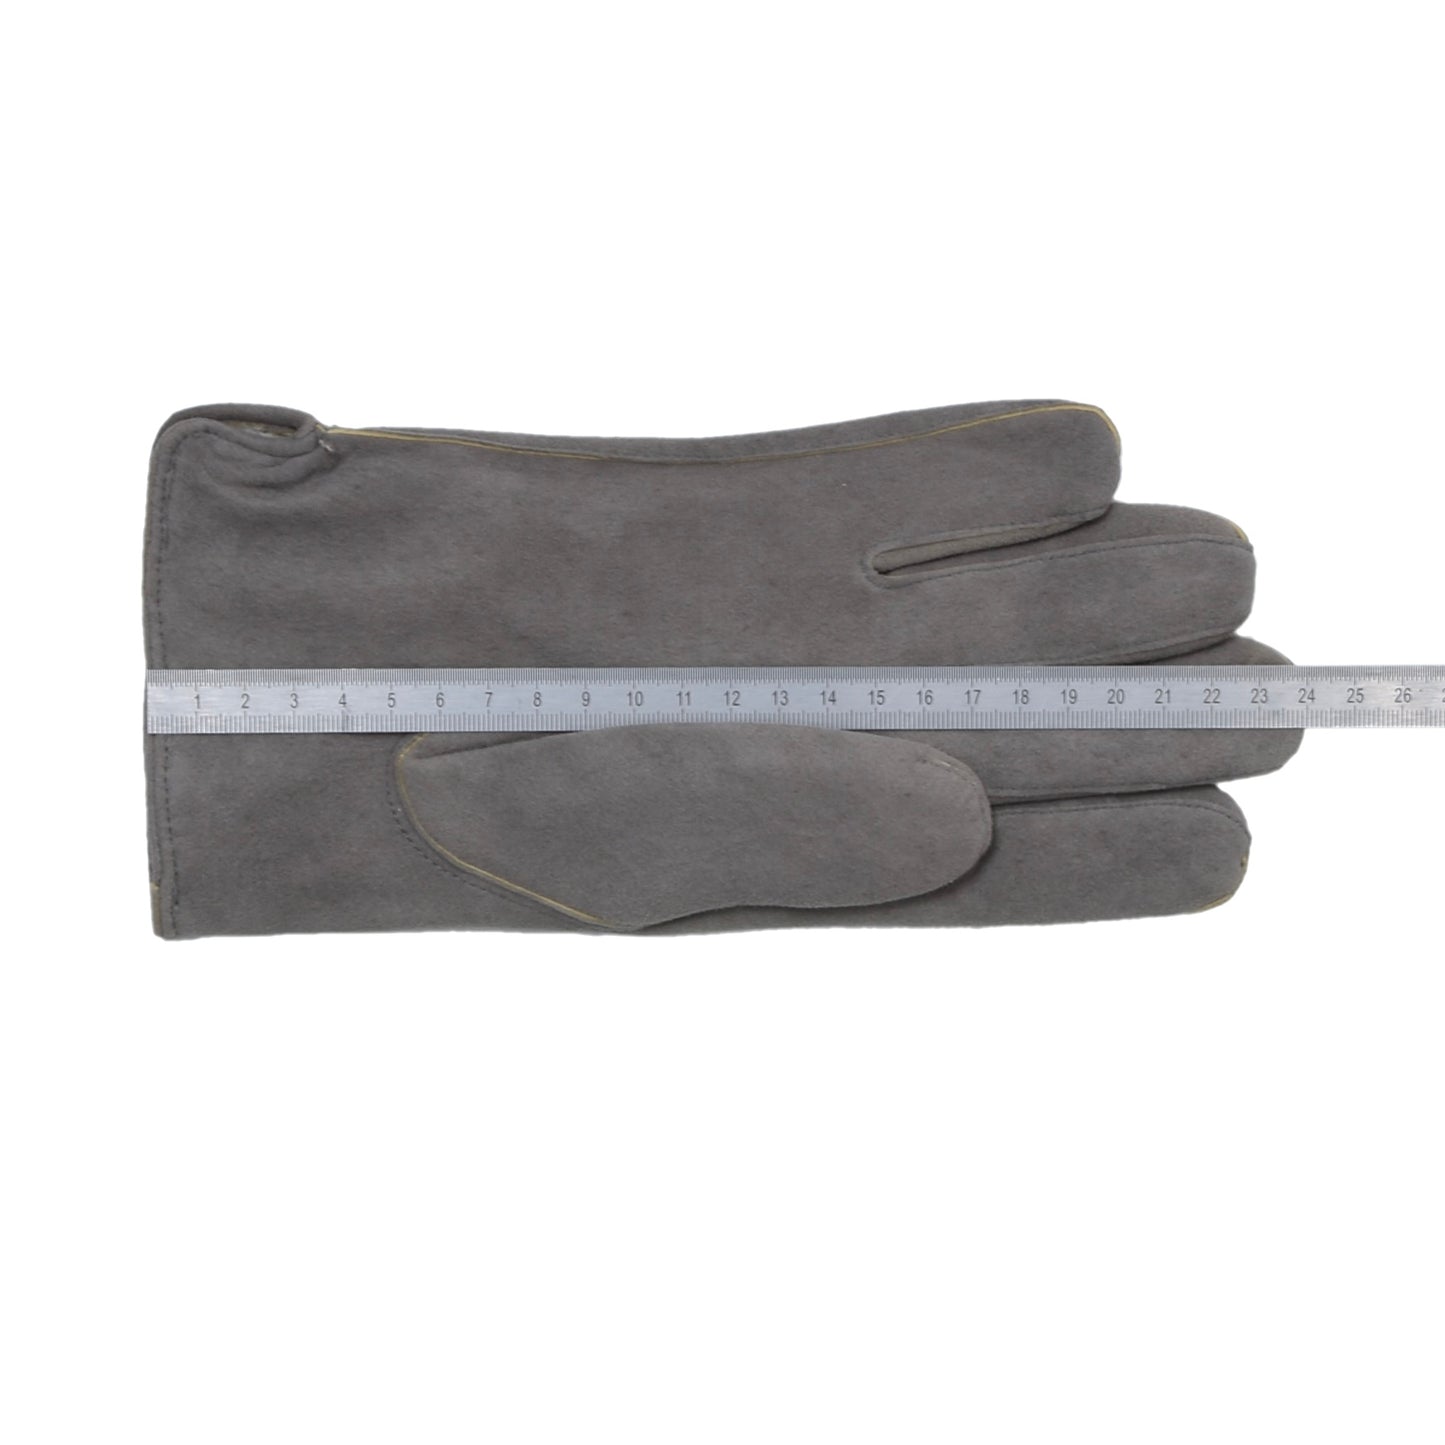 Handschuhpeter Wien Doeskin Gloves Size 8 1/2 - Grey